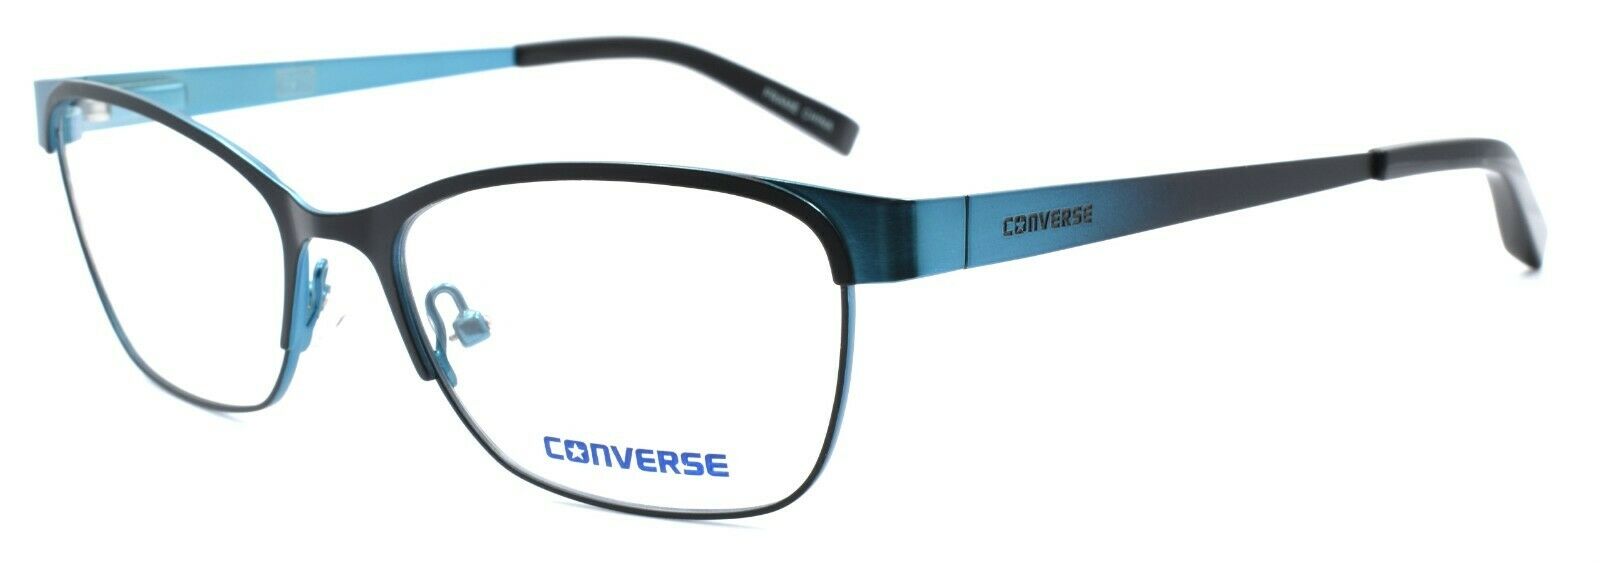 1-CONVERSE Q030 UF Women's Eyeglasses Frames 51-16-135 Black + CASE-751286264821-IKSpecs